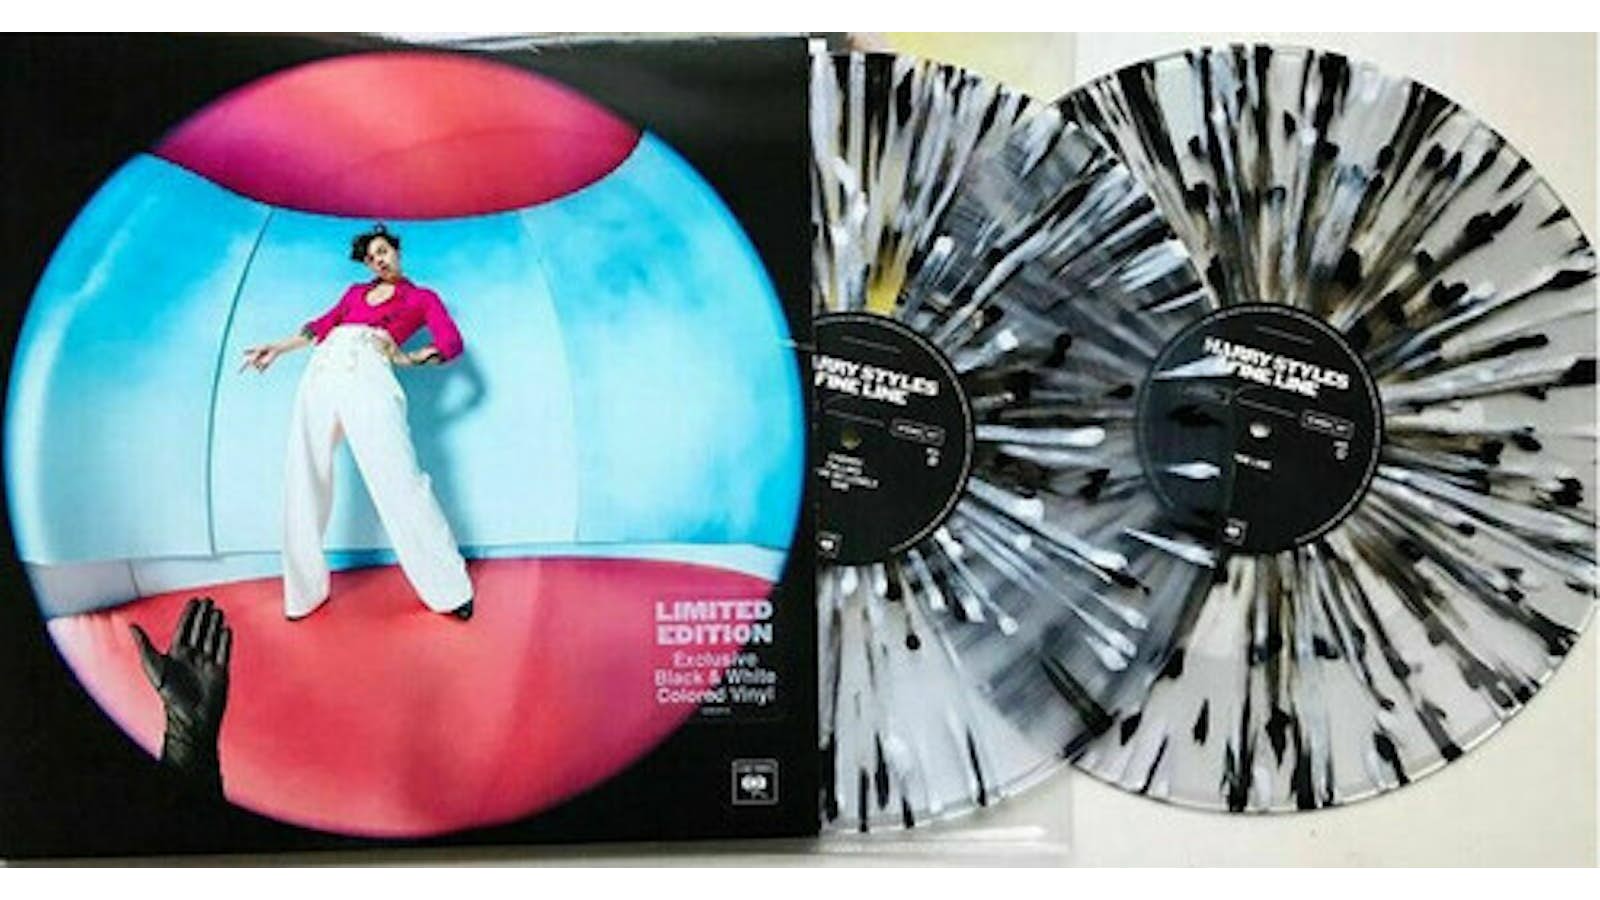 Harry Styles - Fine Line - Vinyl LP Record - Bondi Records